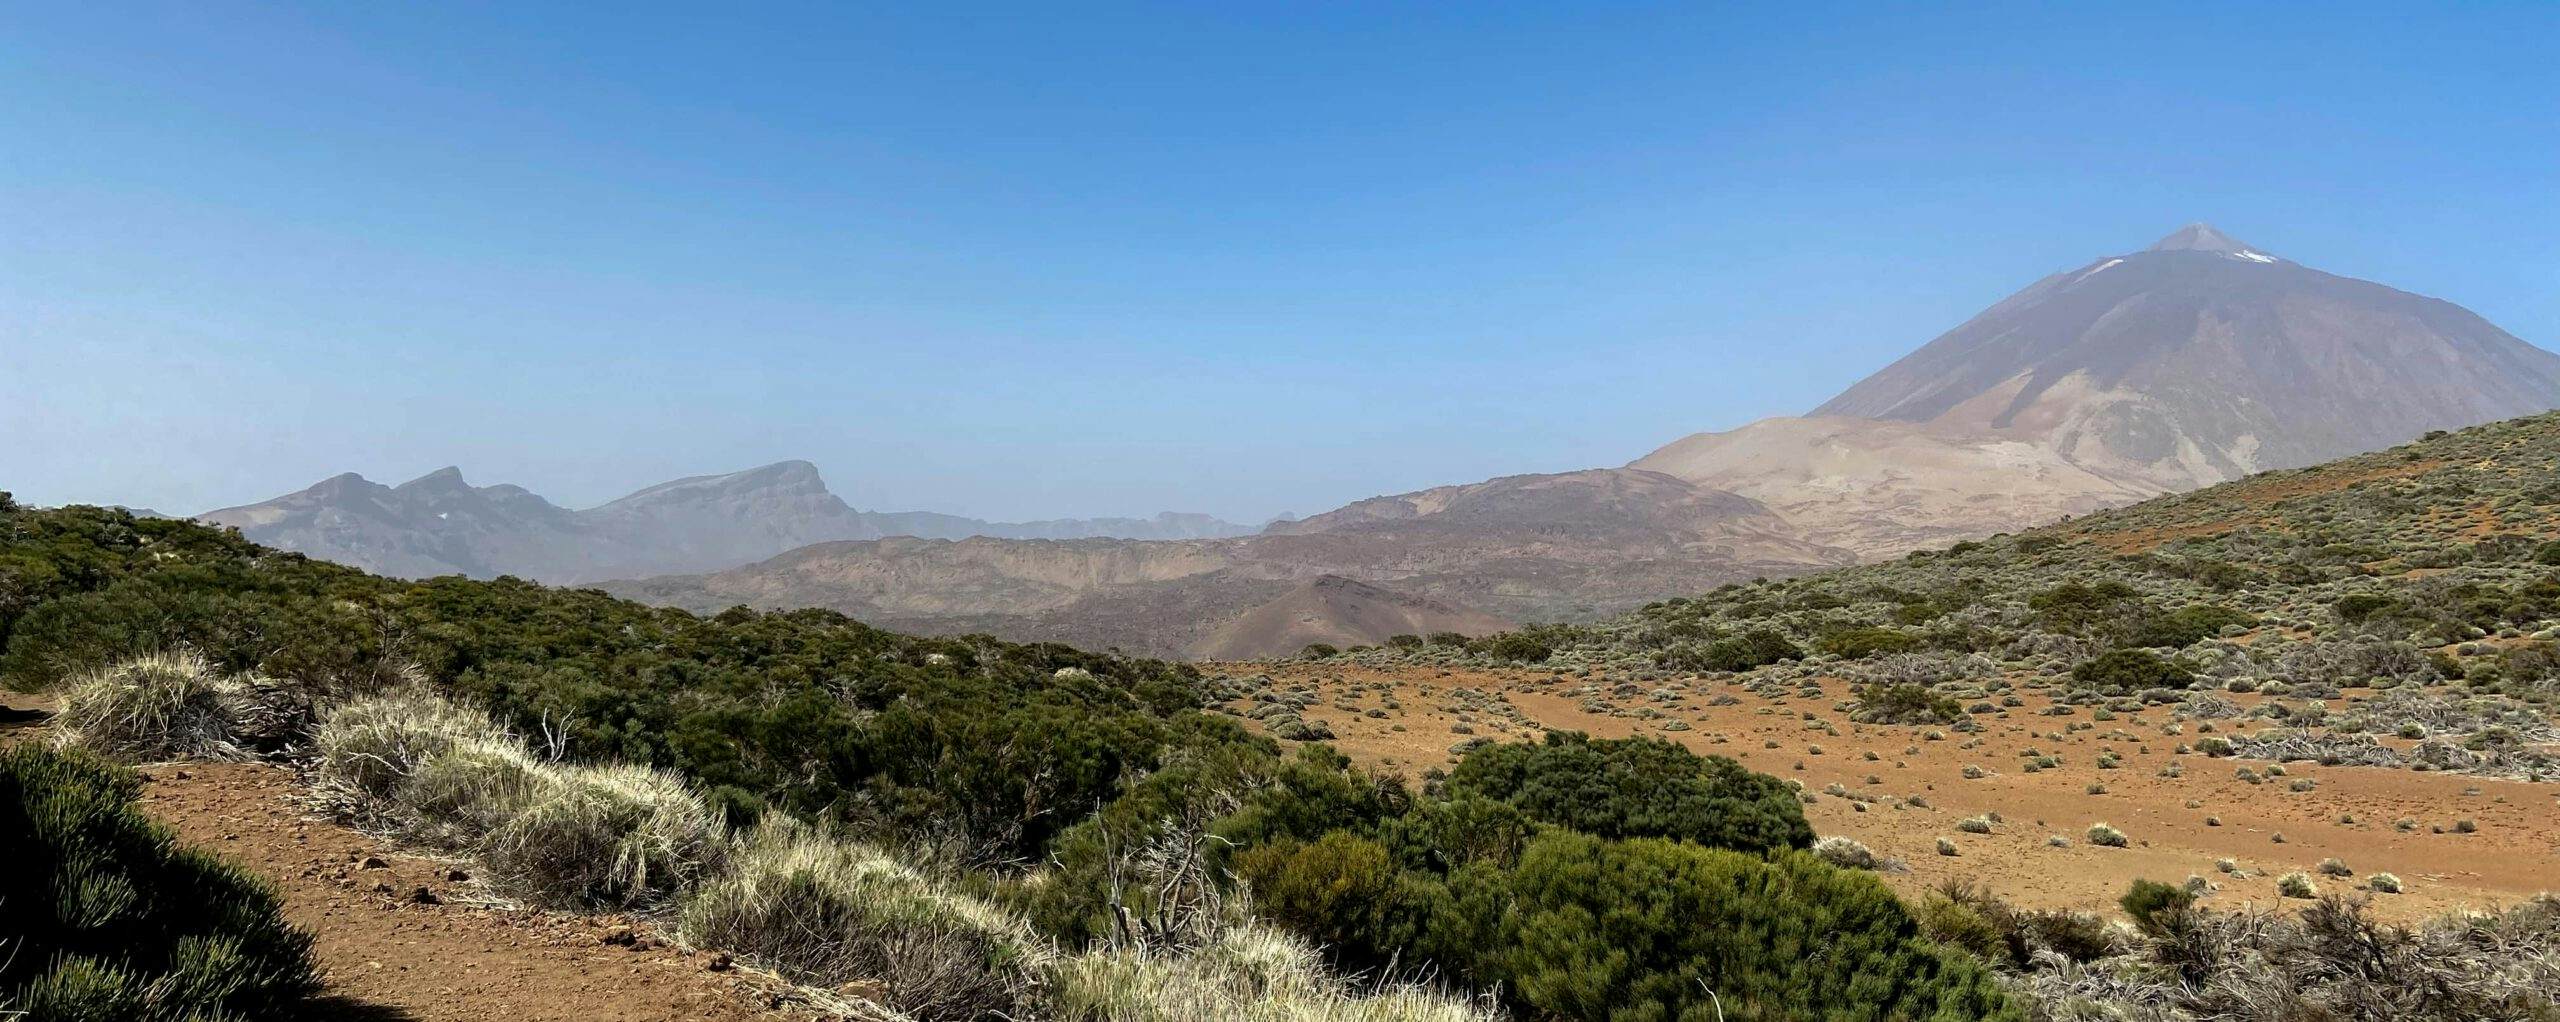 View from the ascent path Montaña de las Arenas Negras to Teide and the Cañadas